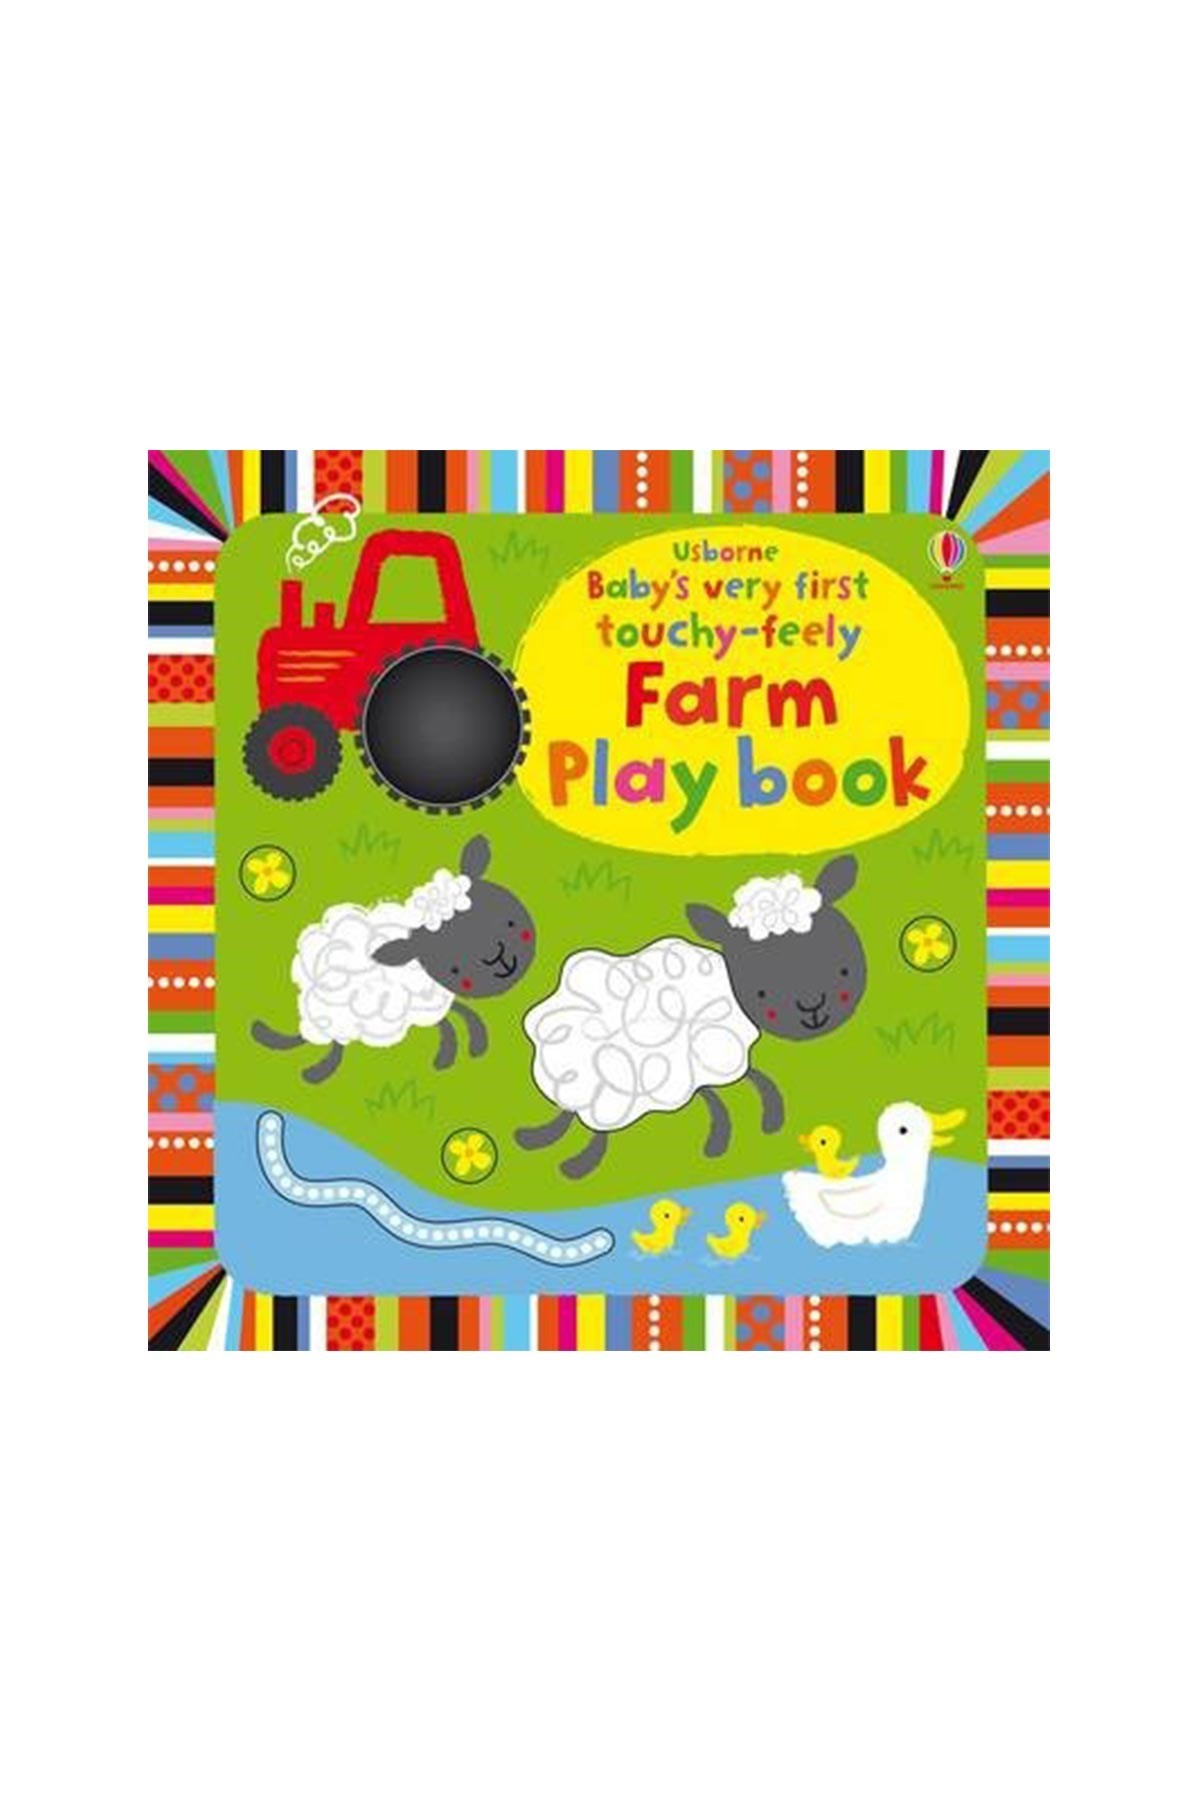 The Usborne BVF Farm Play Book